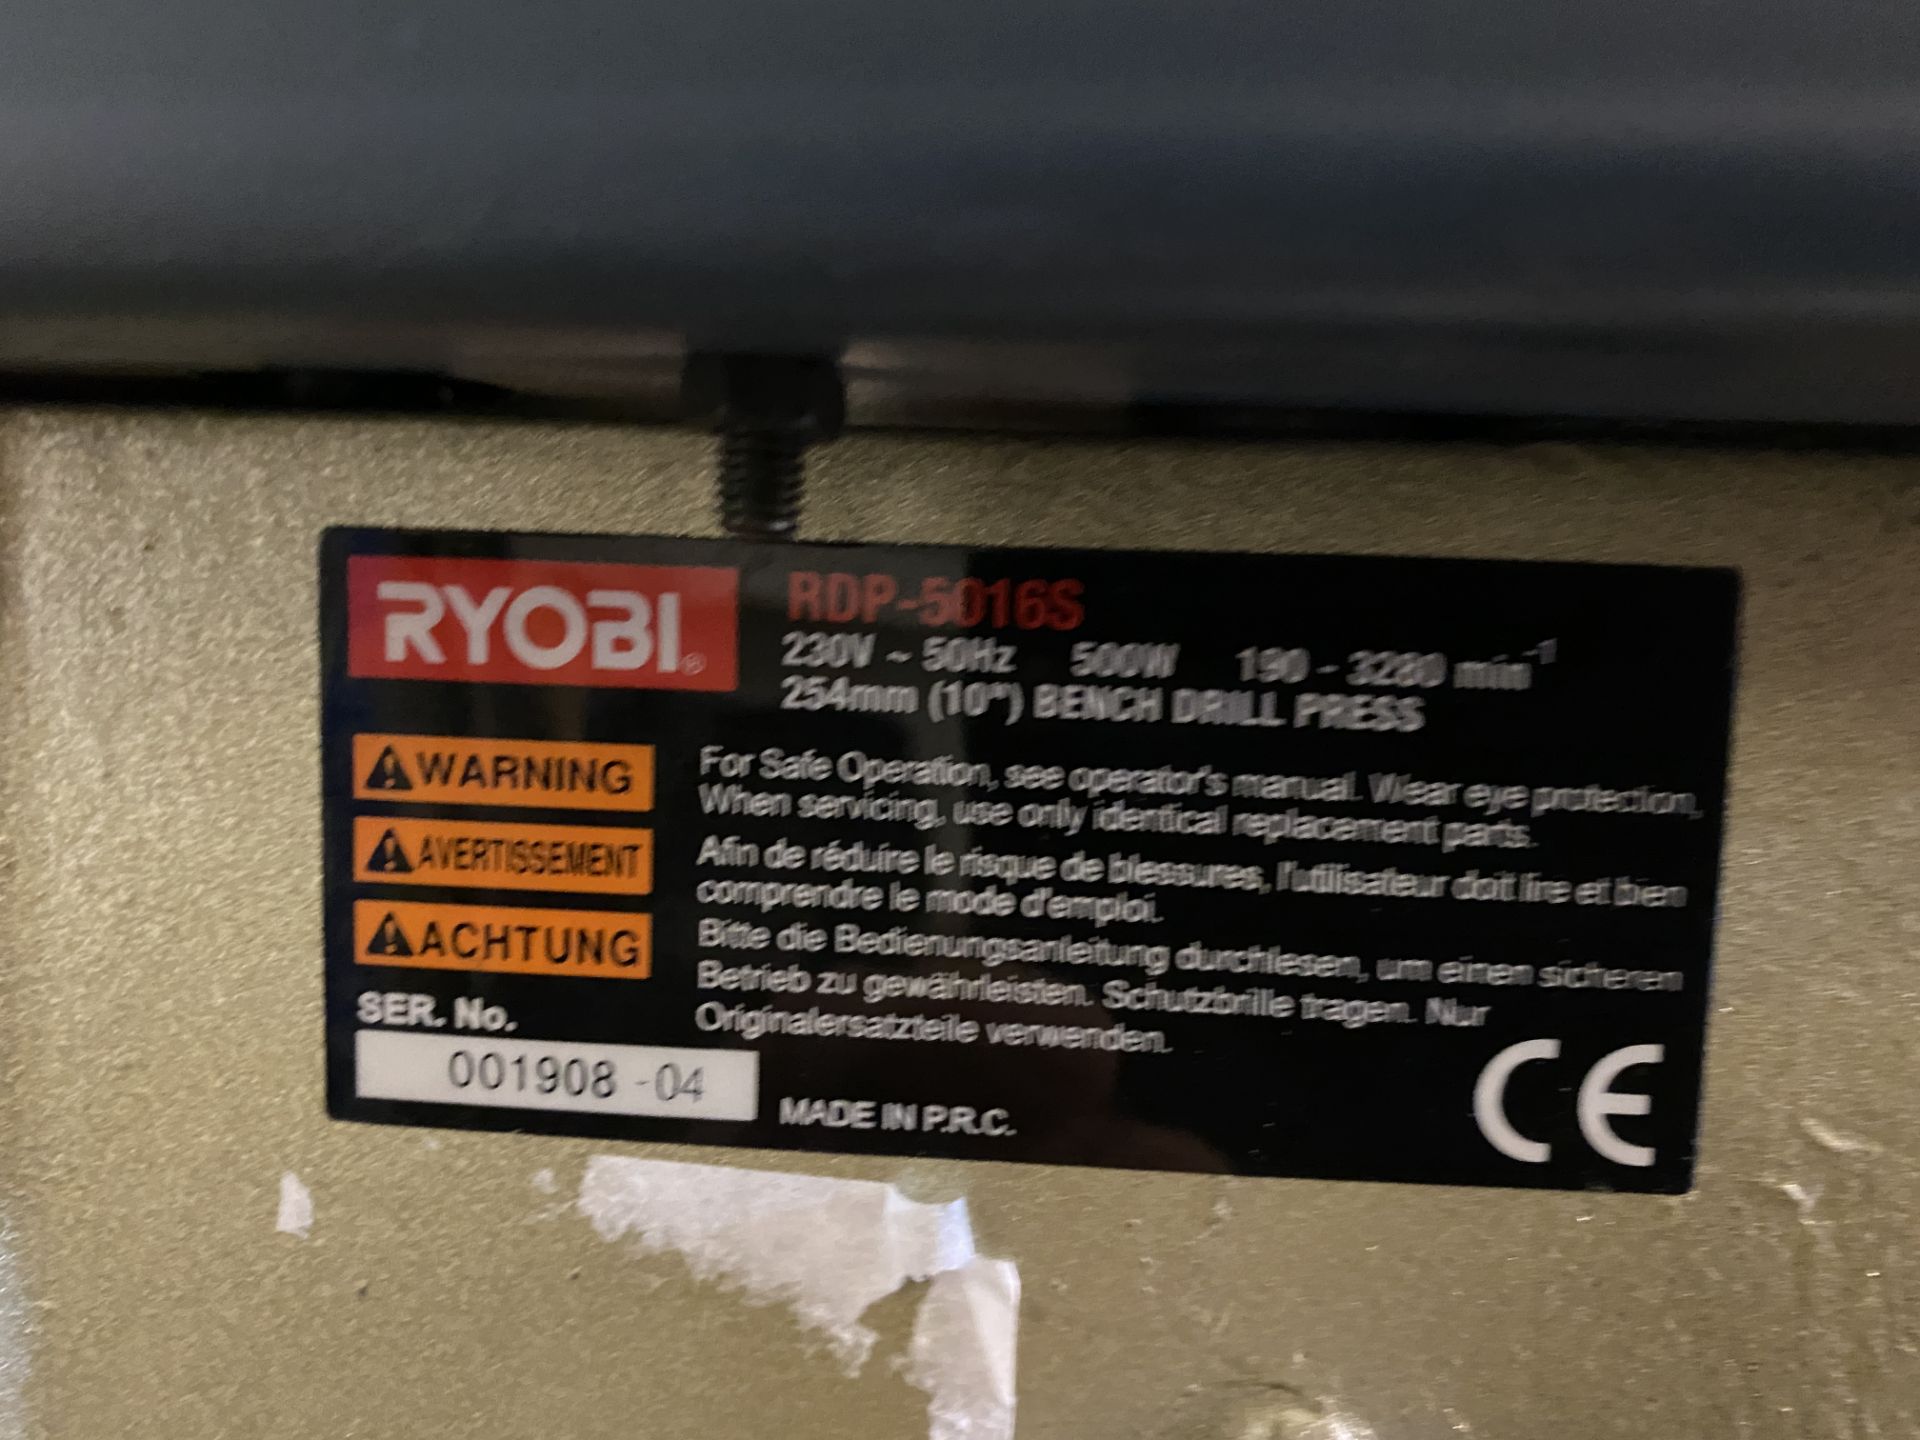 Ryobi RDP-5016S bench type pillar drill, serial no: 001908-04 (2004) -240v on stand - Image 2 of 2